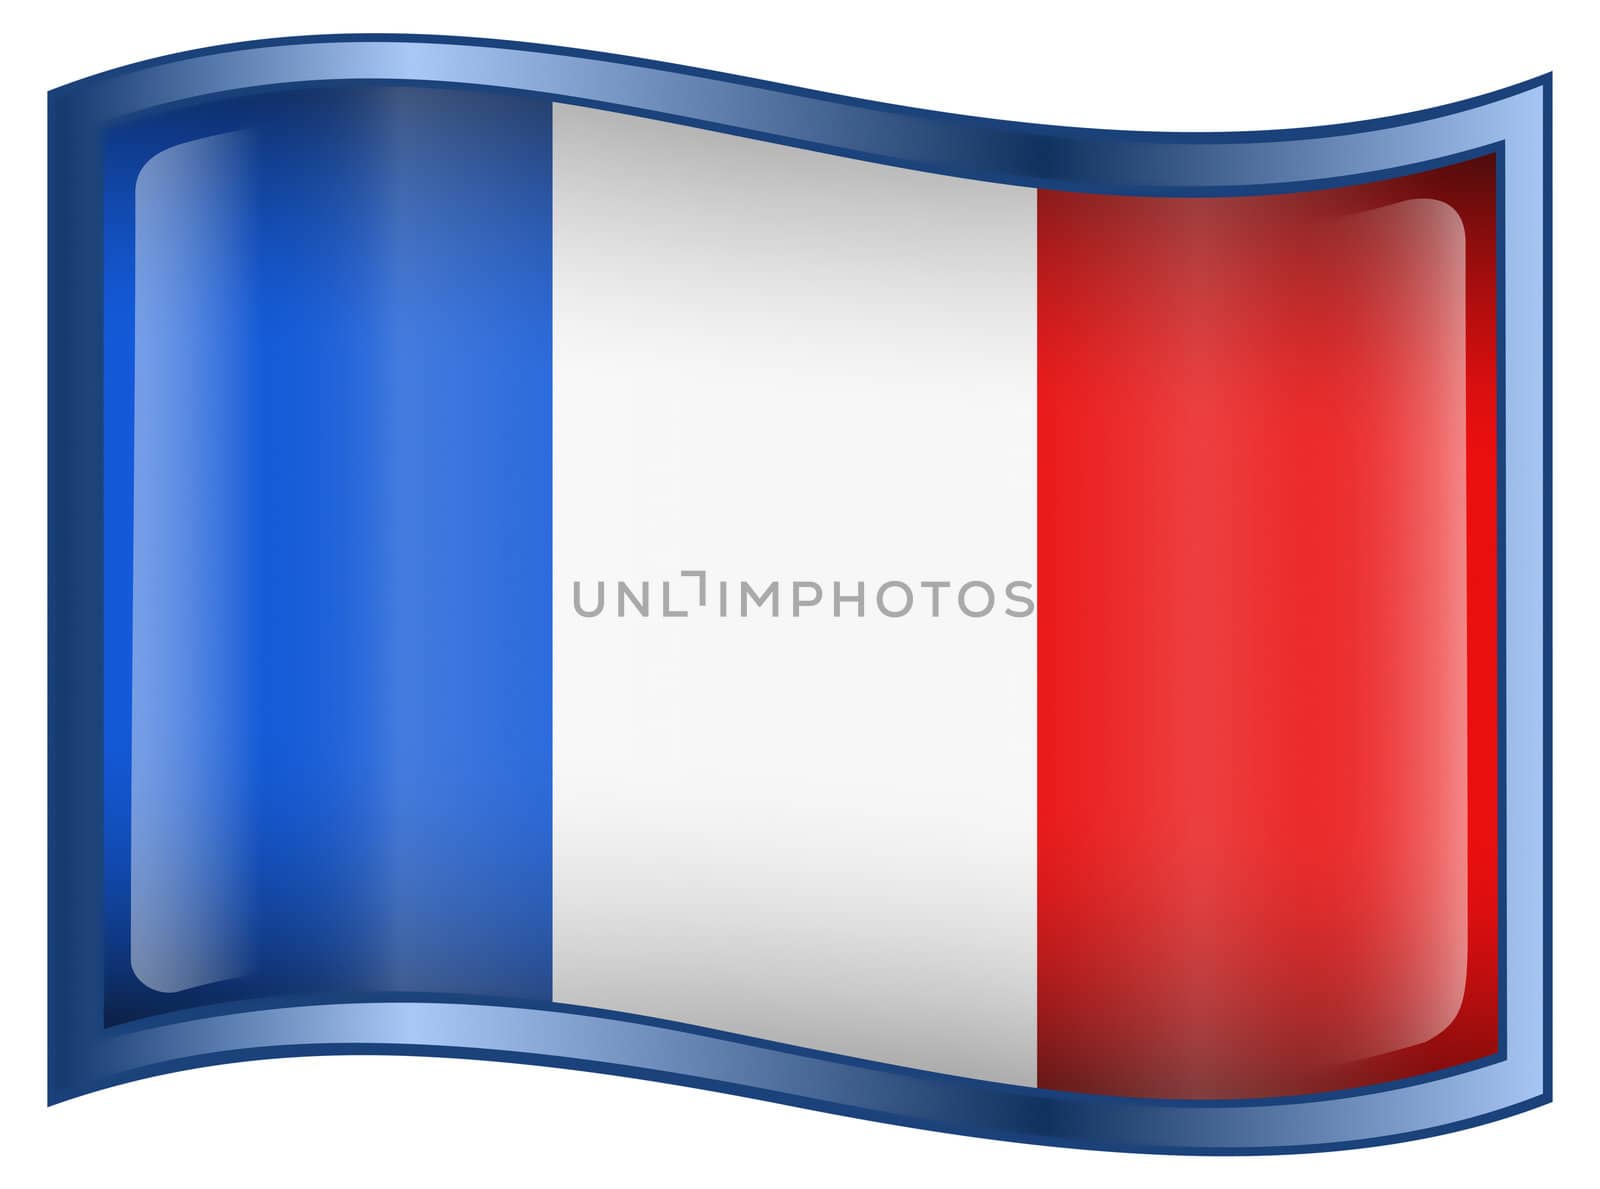 France Flag Icon, isolated on white background.